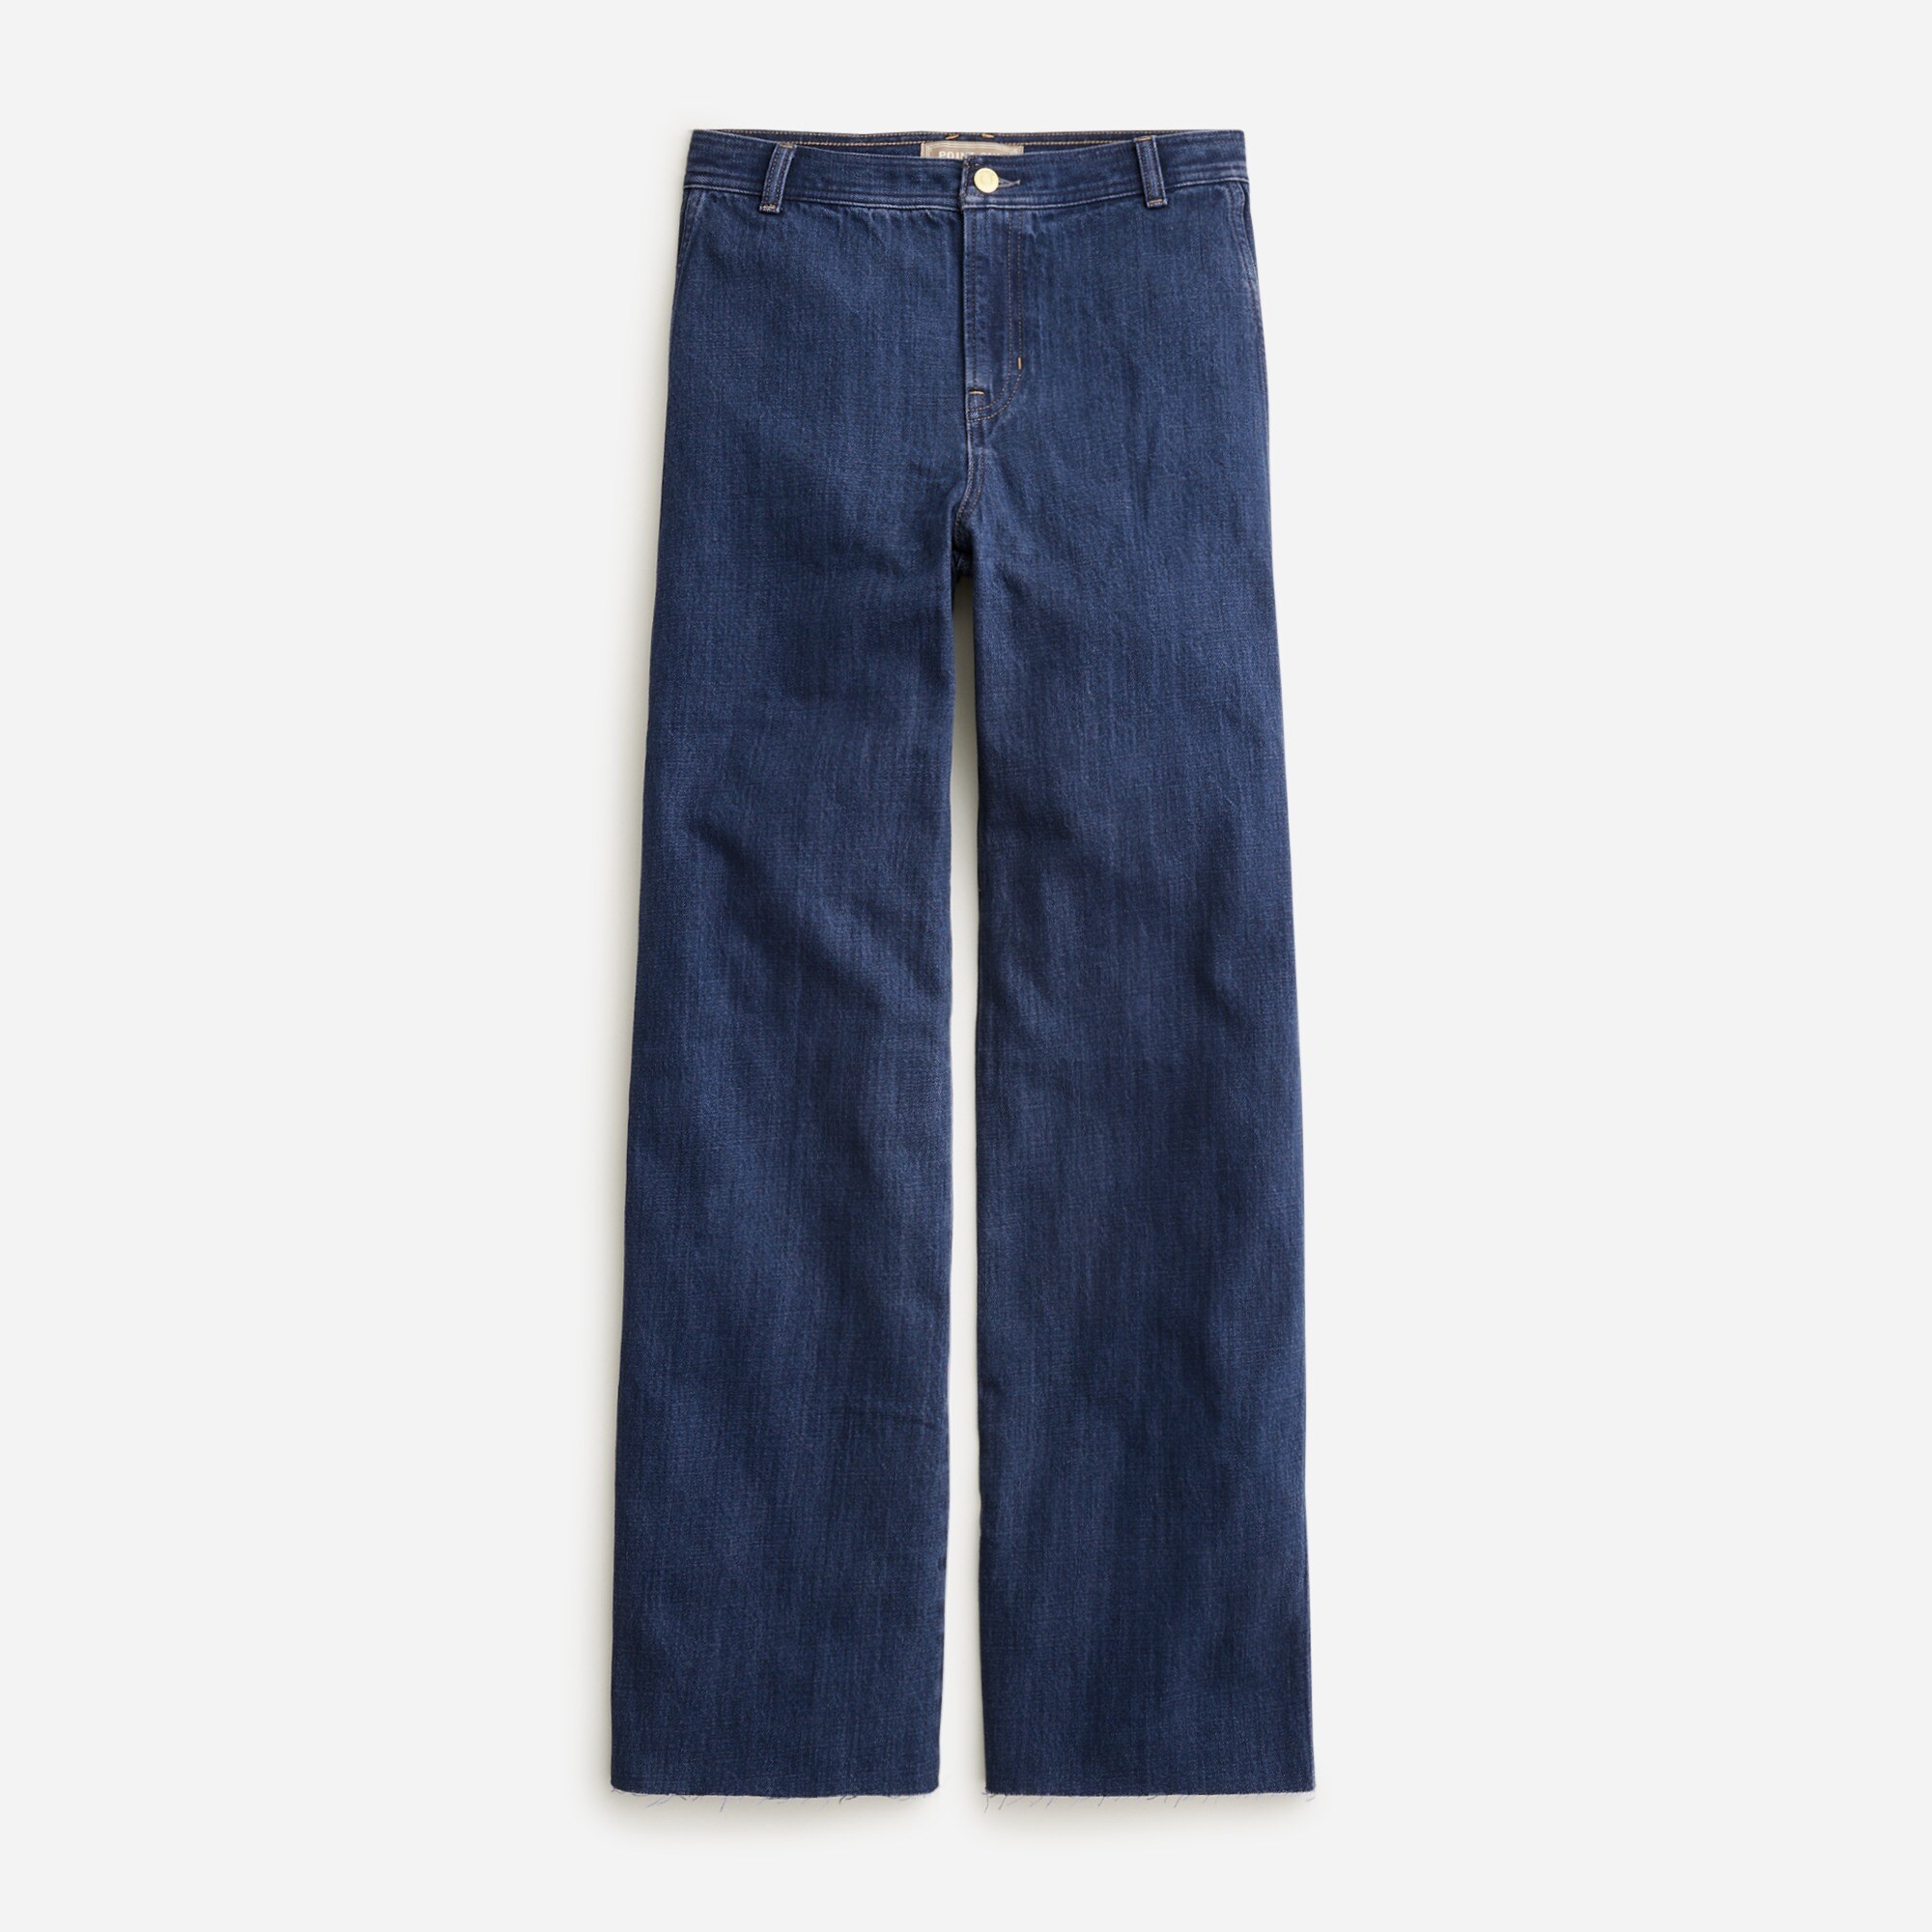  Point Sur vintage slim wide-leg jean in June wash